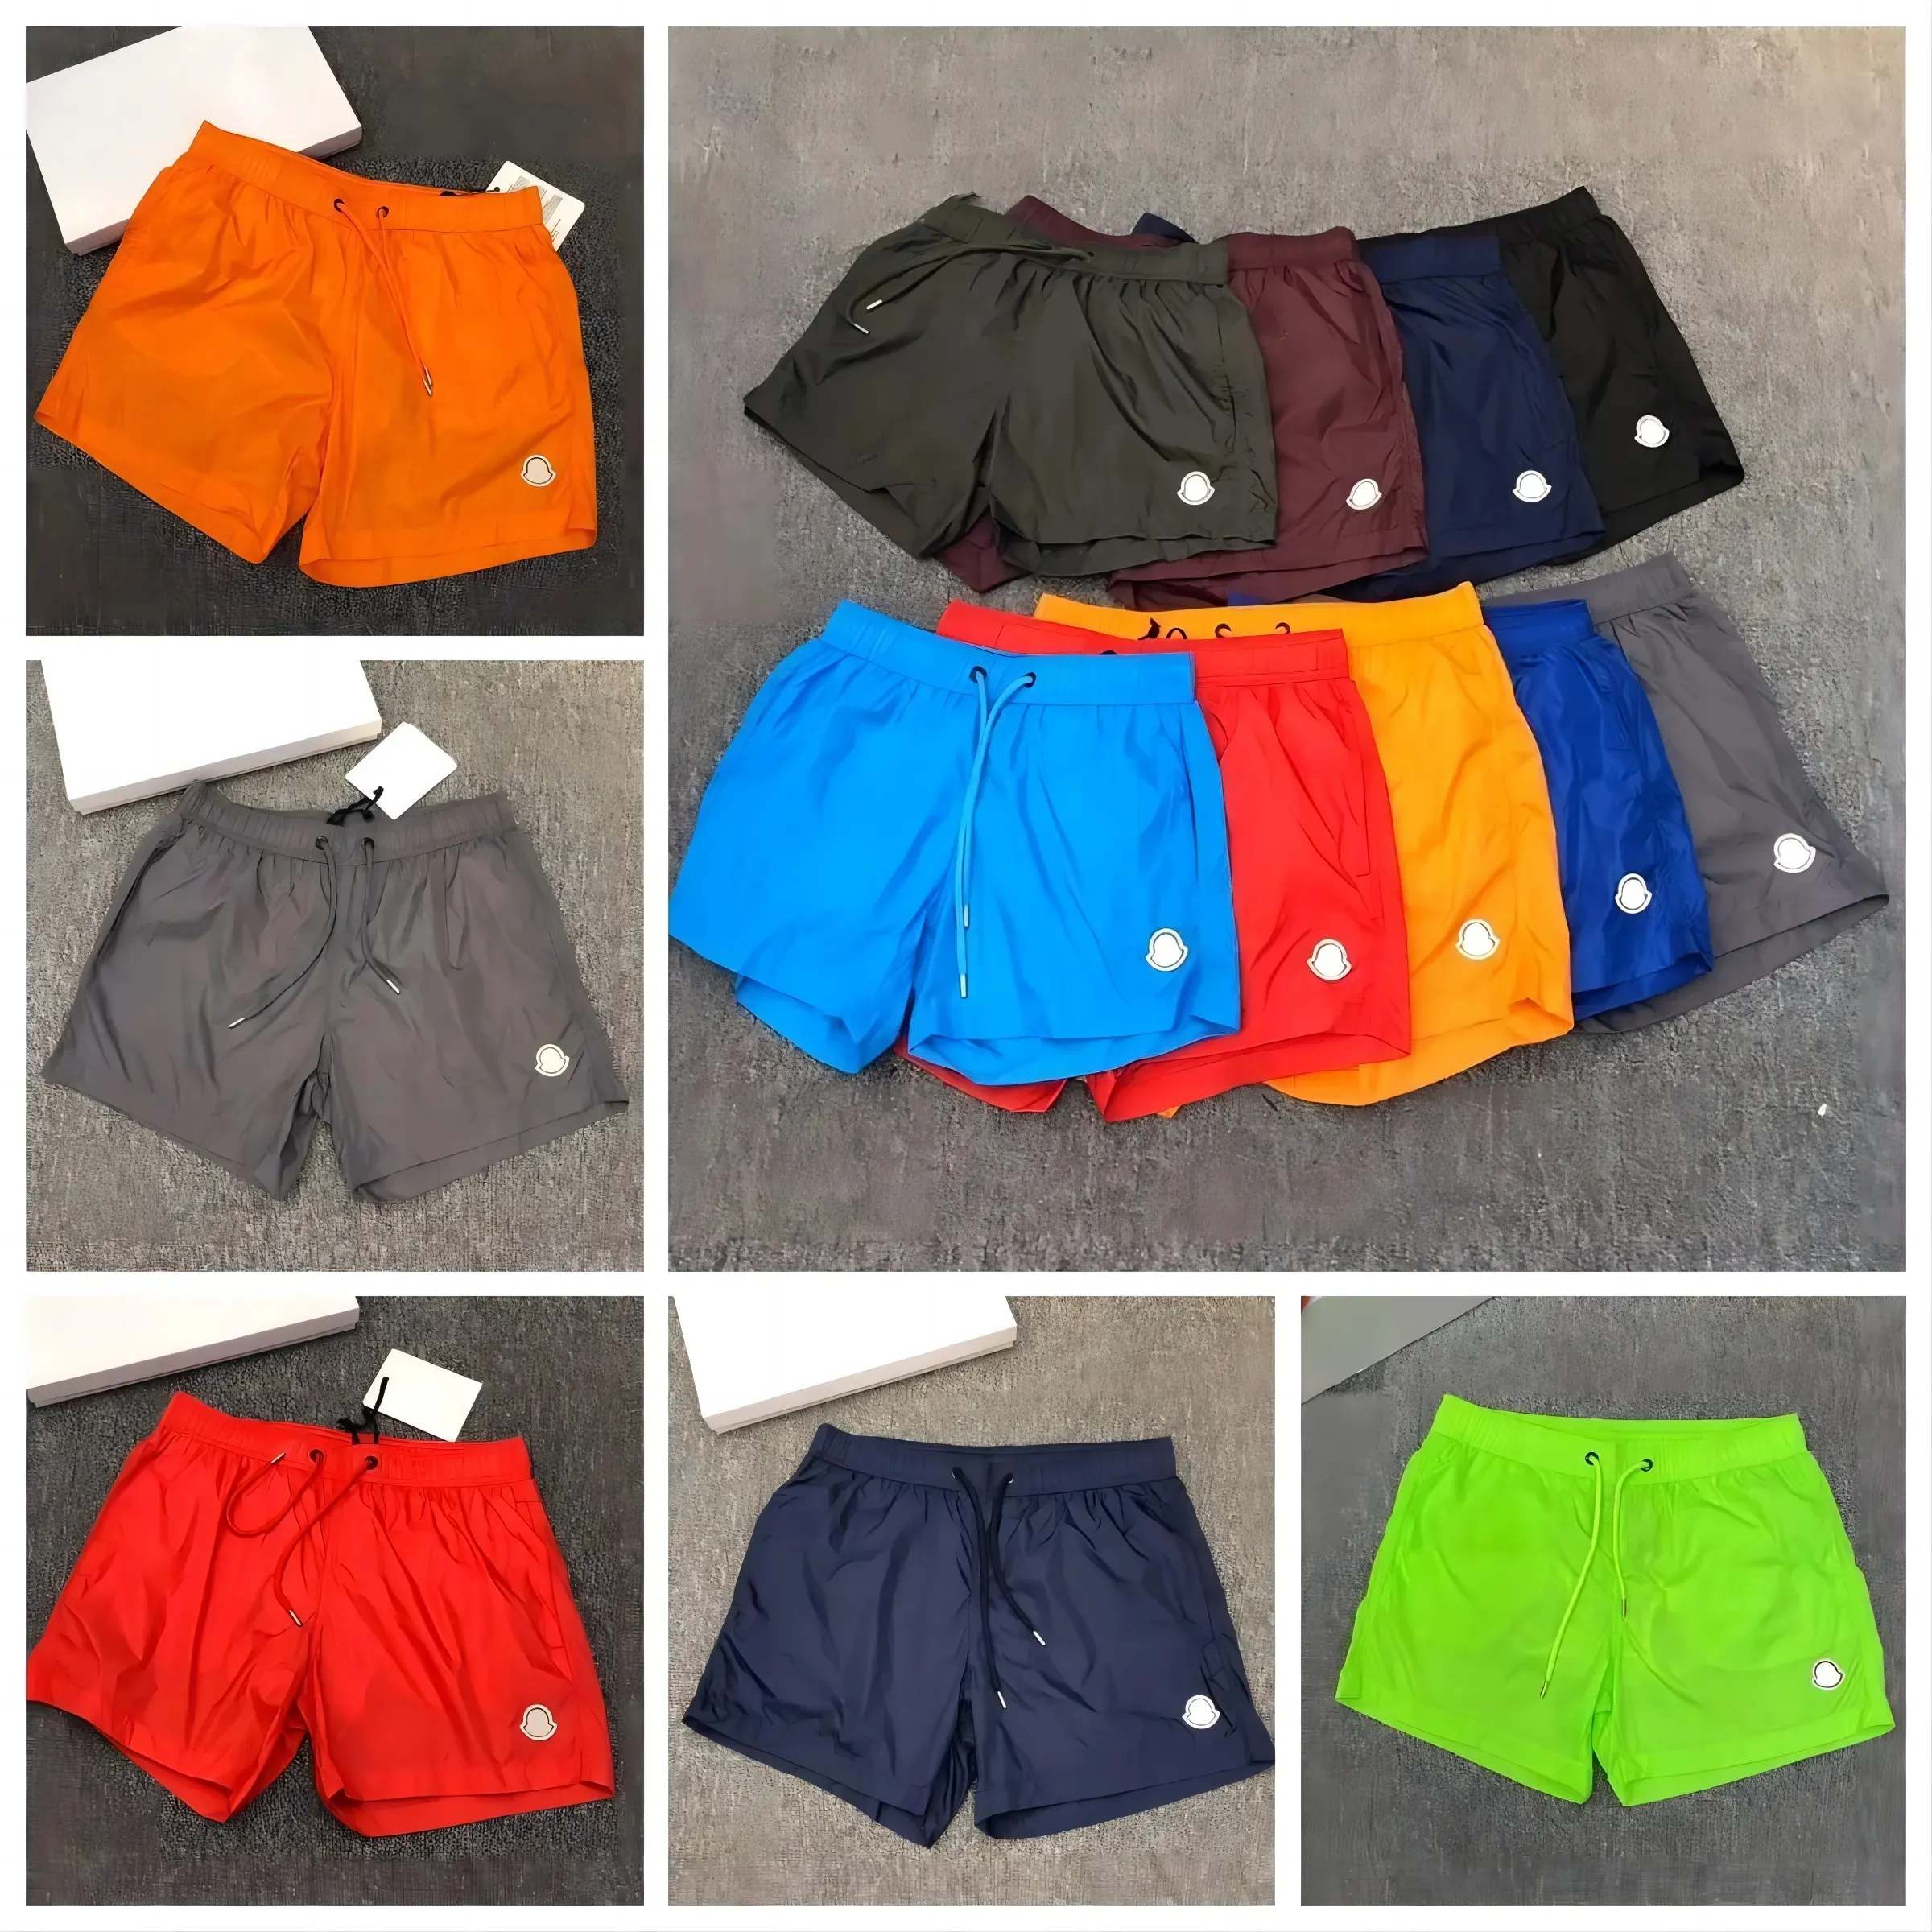 designer French brand mens shorts luxury men s short sport summer women trend pure breathable brand Beach pants size M-5XL Color black gray green pink orange